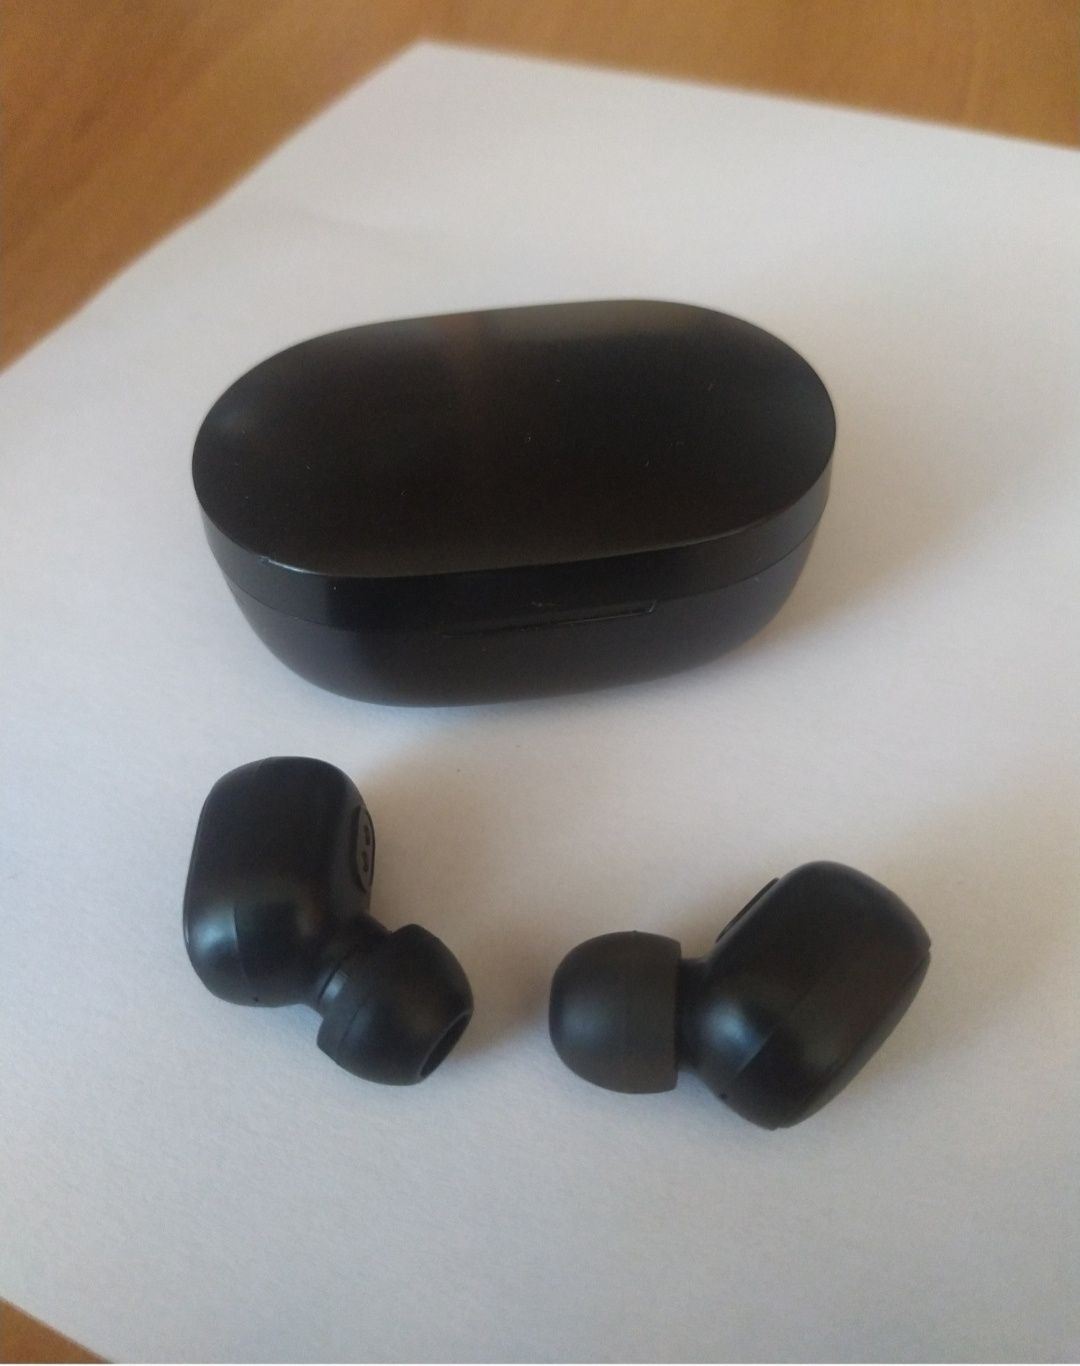 mi true wireless earbuds basic (airdots)